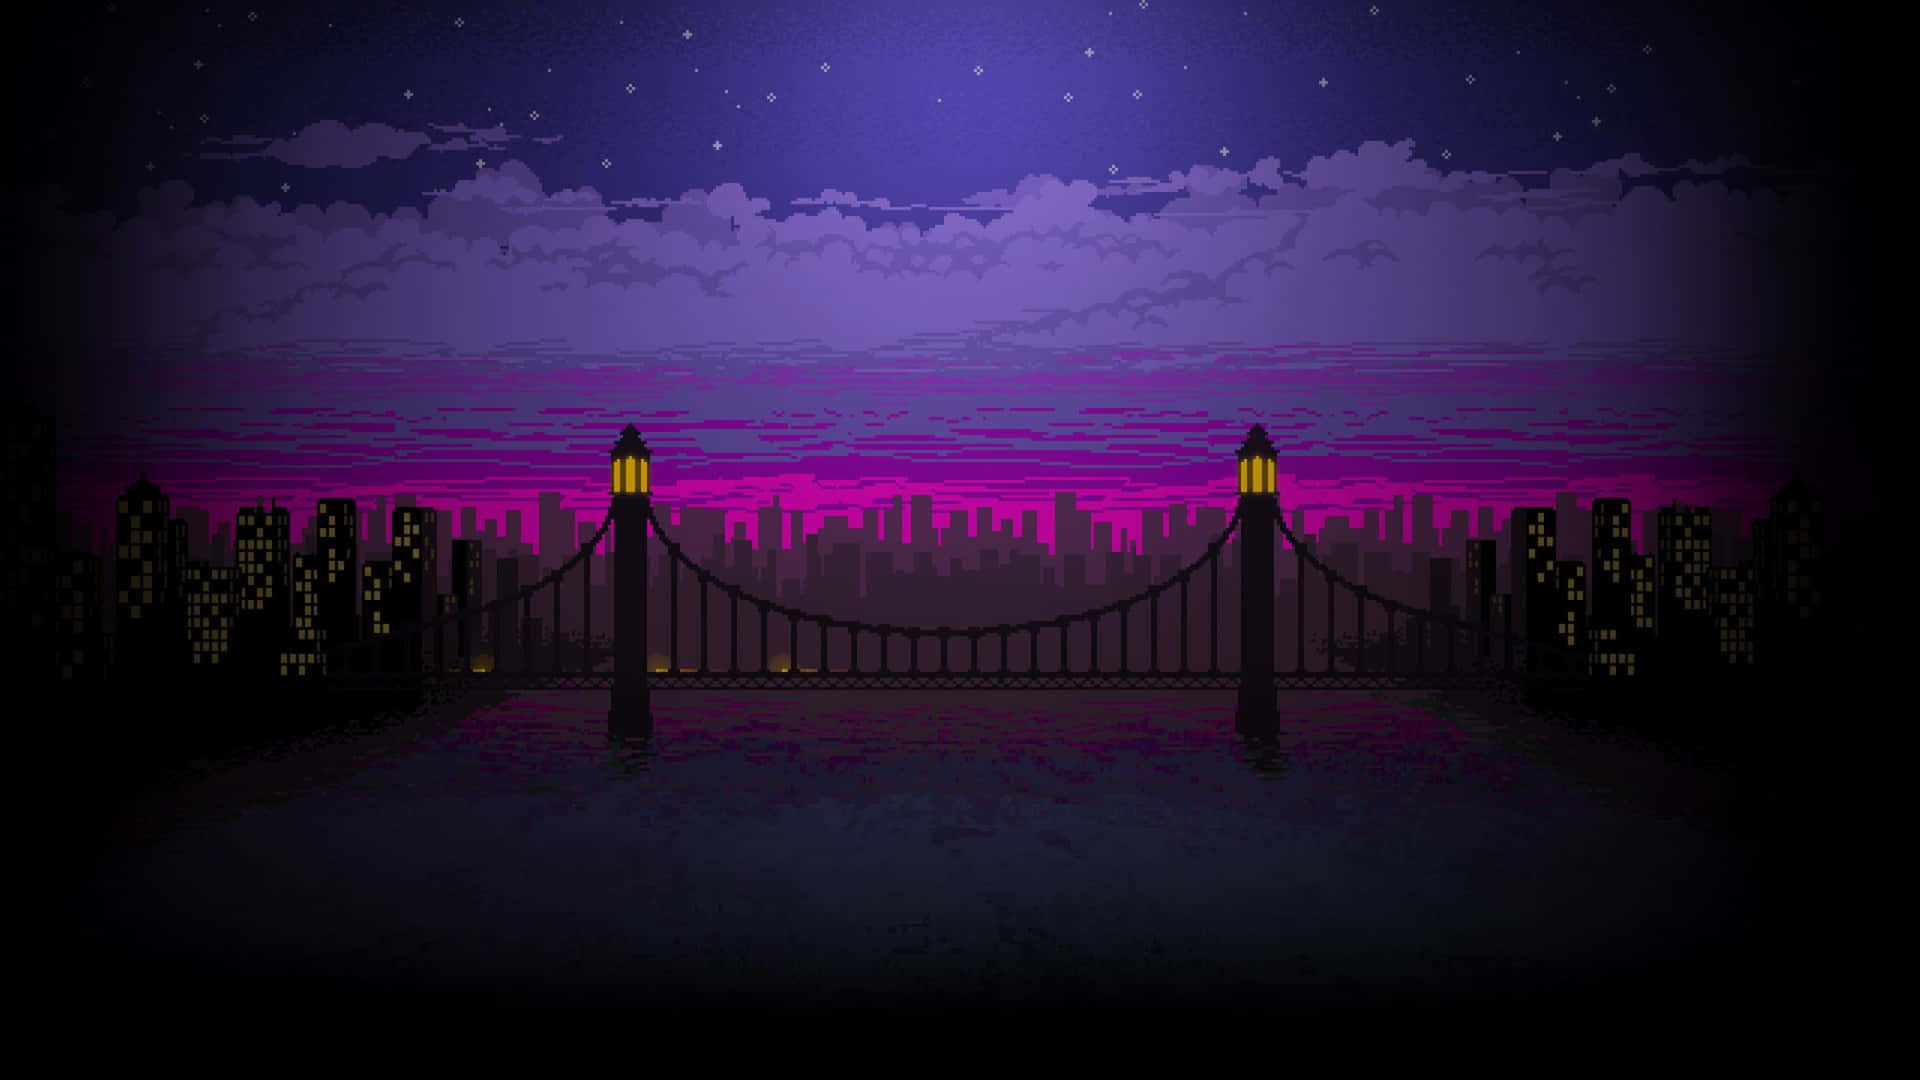 A Purple Night Sky With A Bridge And City Lights